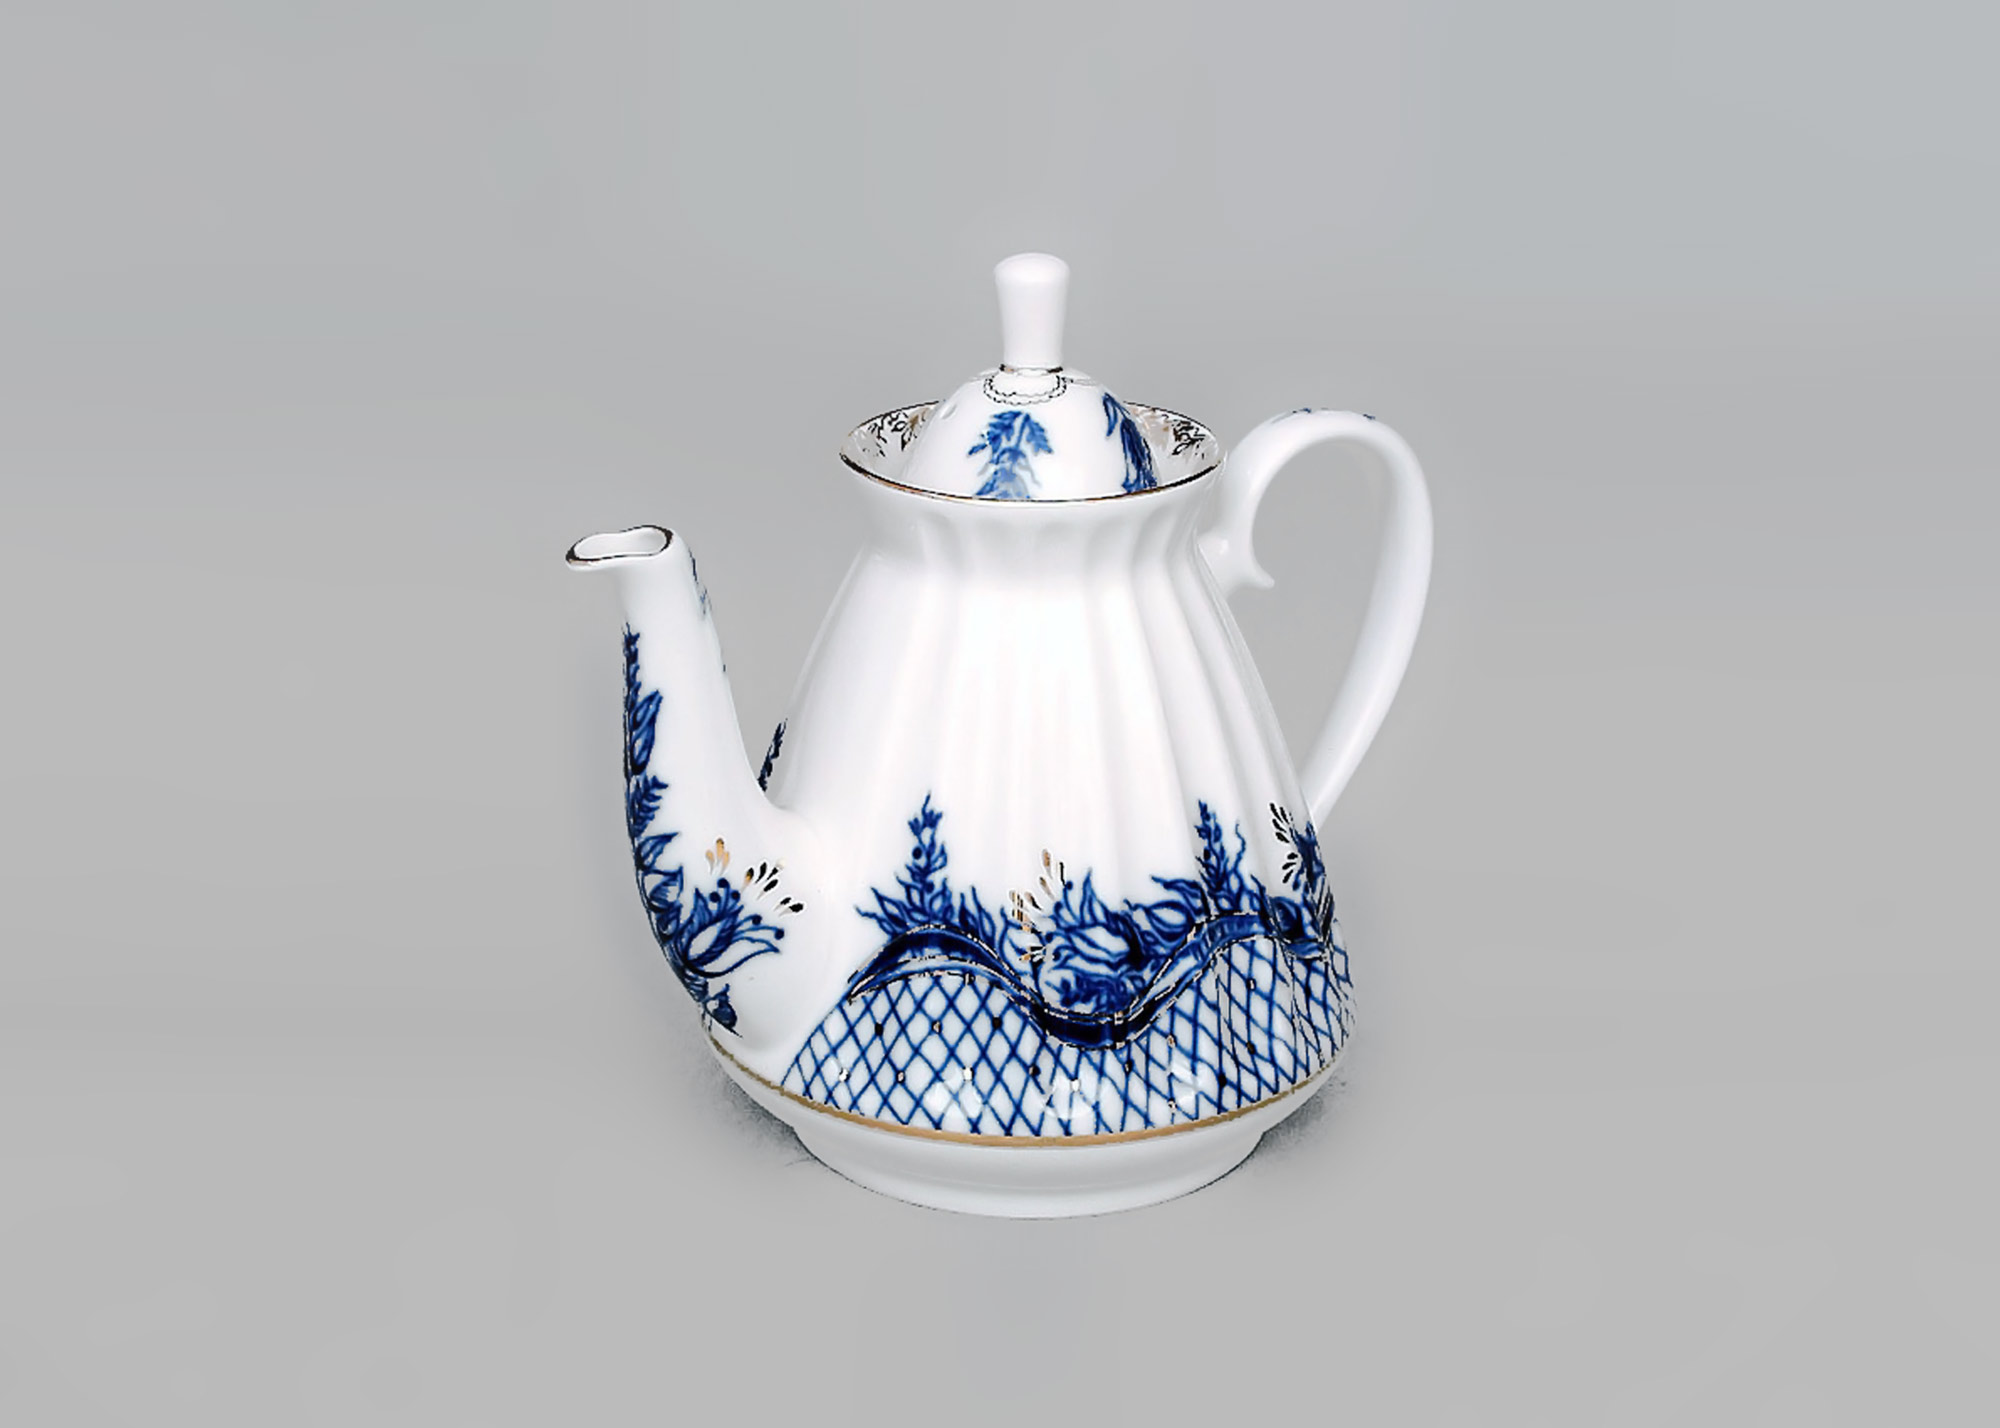 Buy Blue Rhapsody Teapot, 3 cup at GoldenCockerel.com